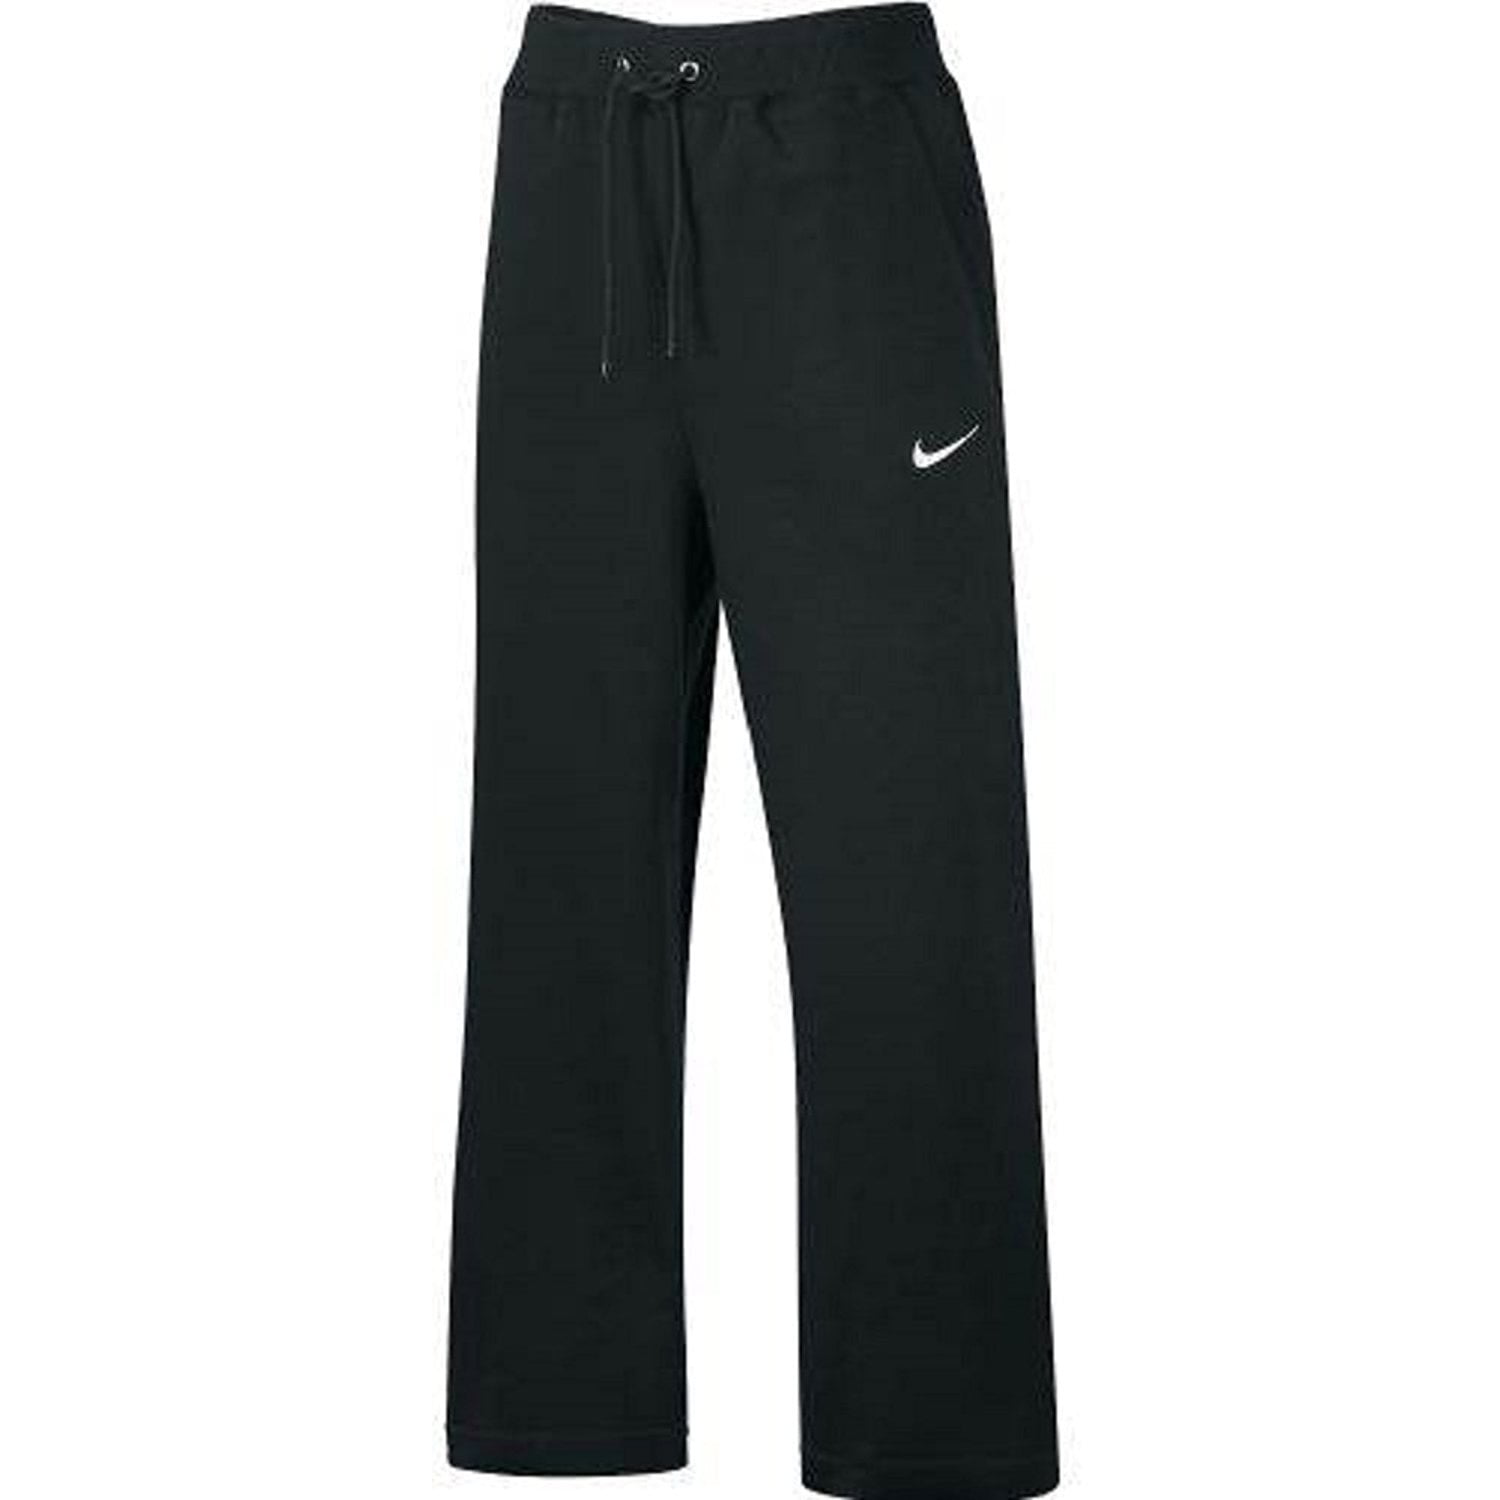 Nike Women's Team Club Fleece Pant - Walmart.com